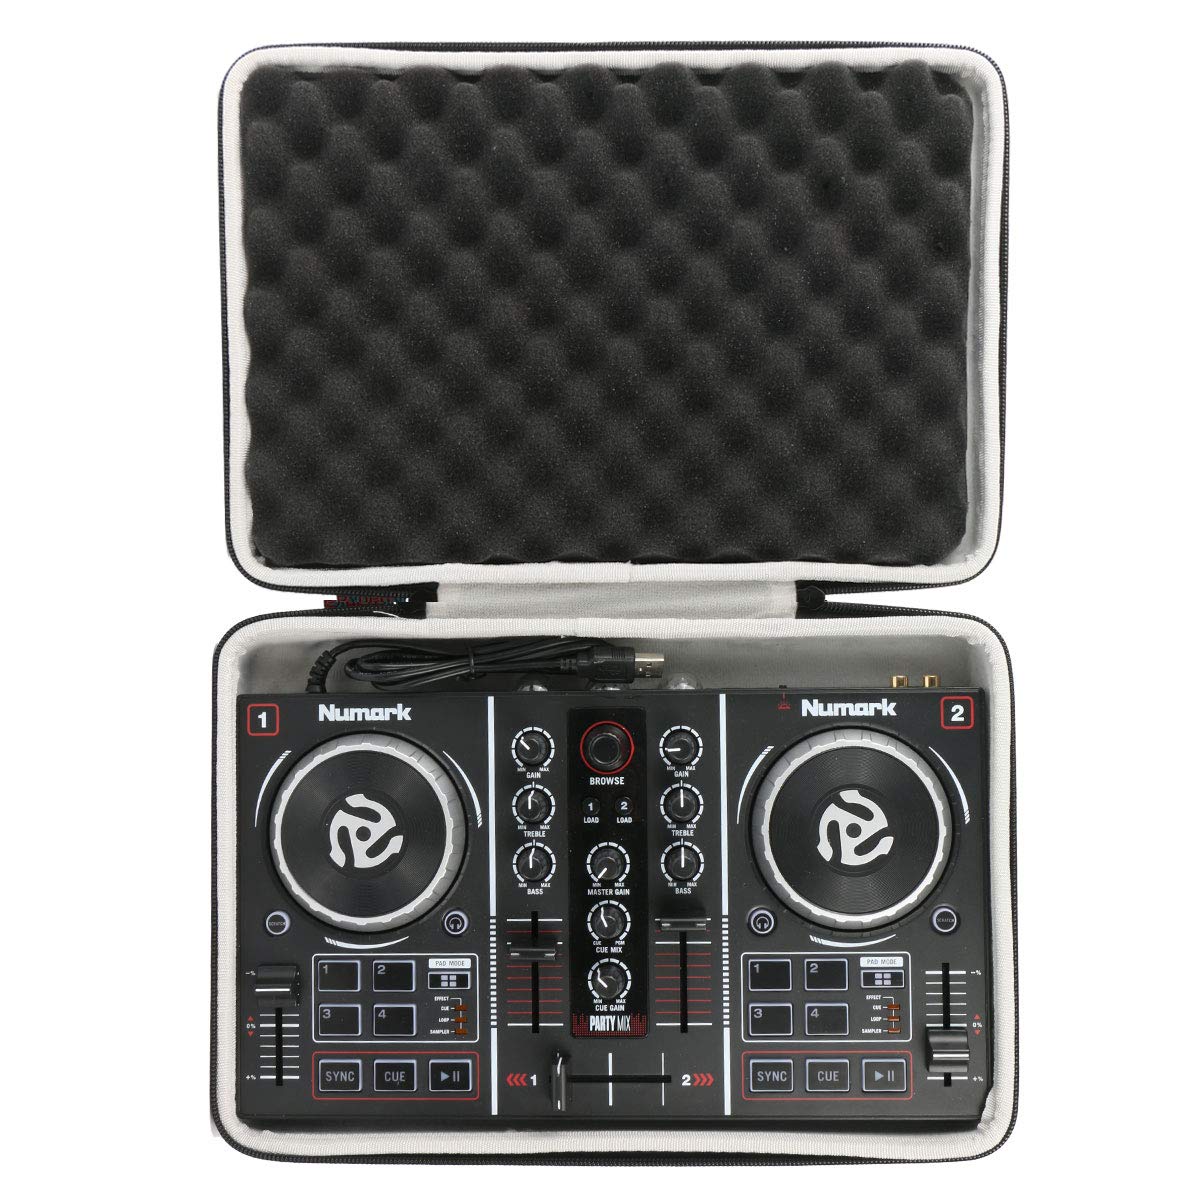 khanka Hard Travel Case Replacement for Hercules DJ 200 / Numark Party Mix Portable USB Controller